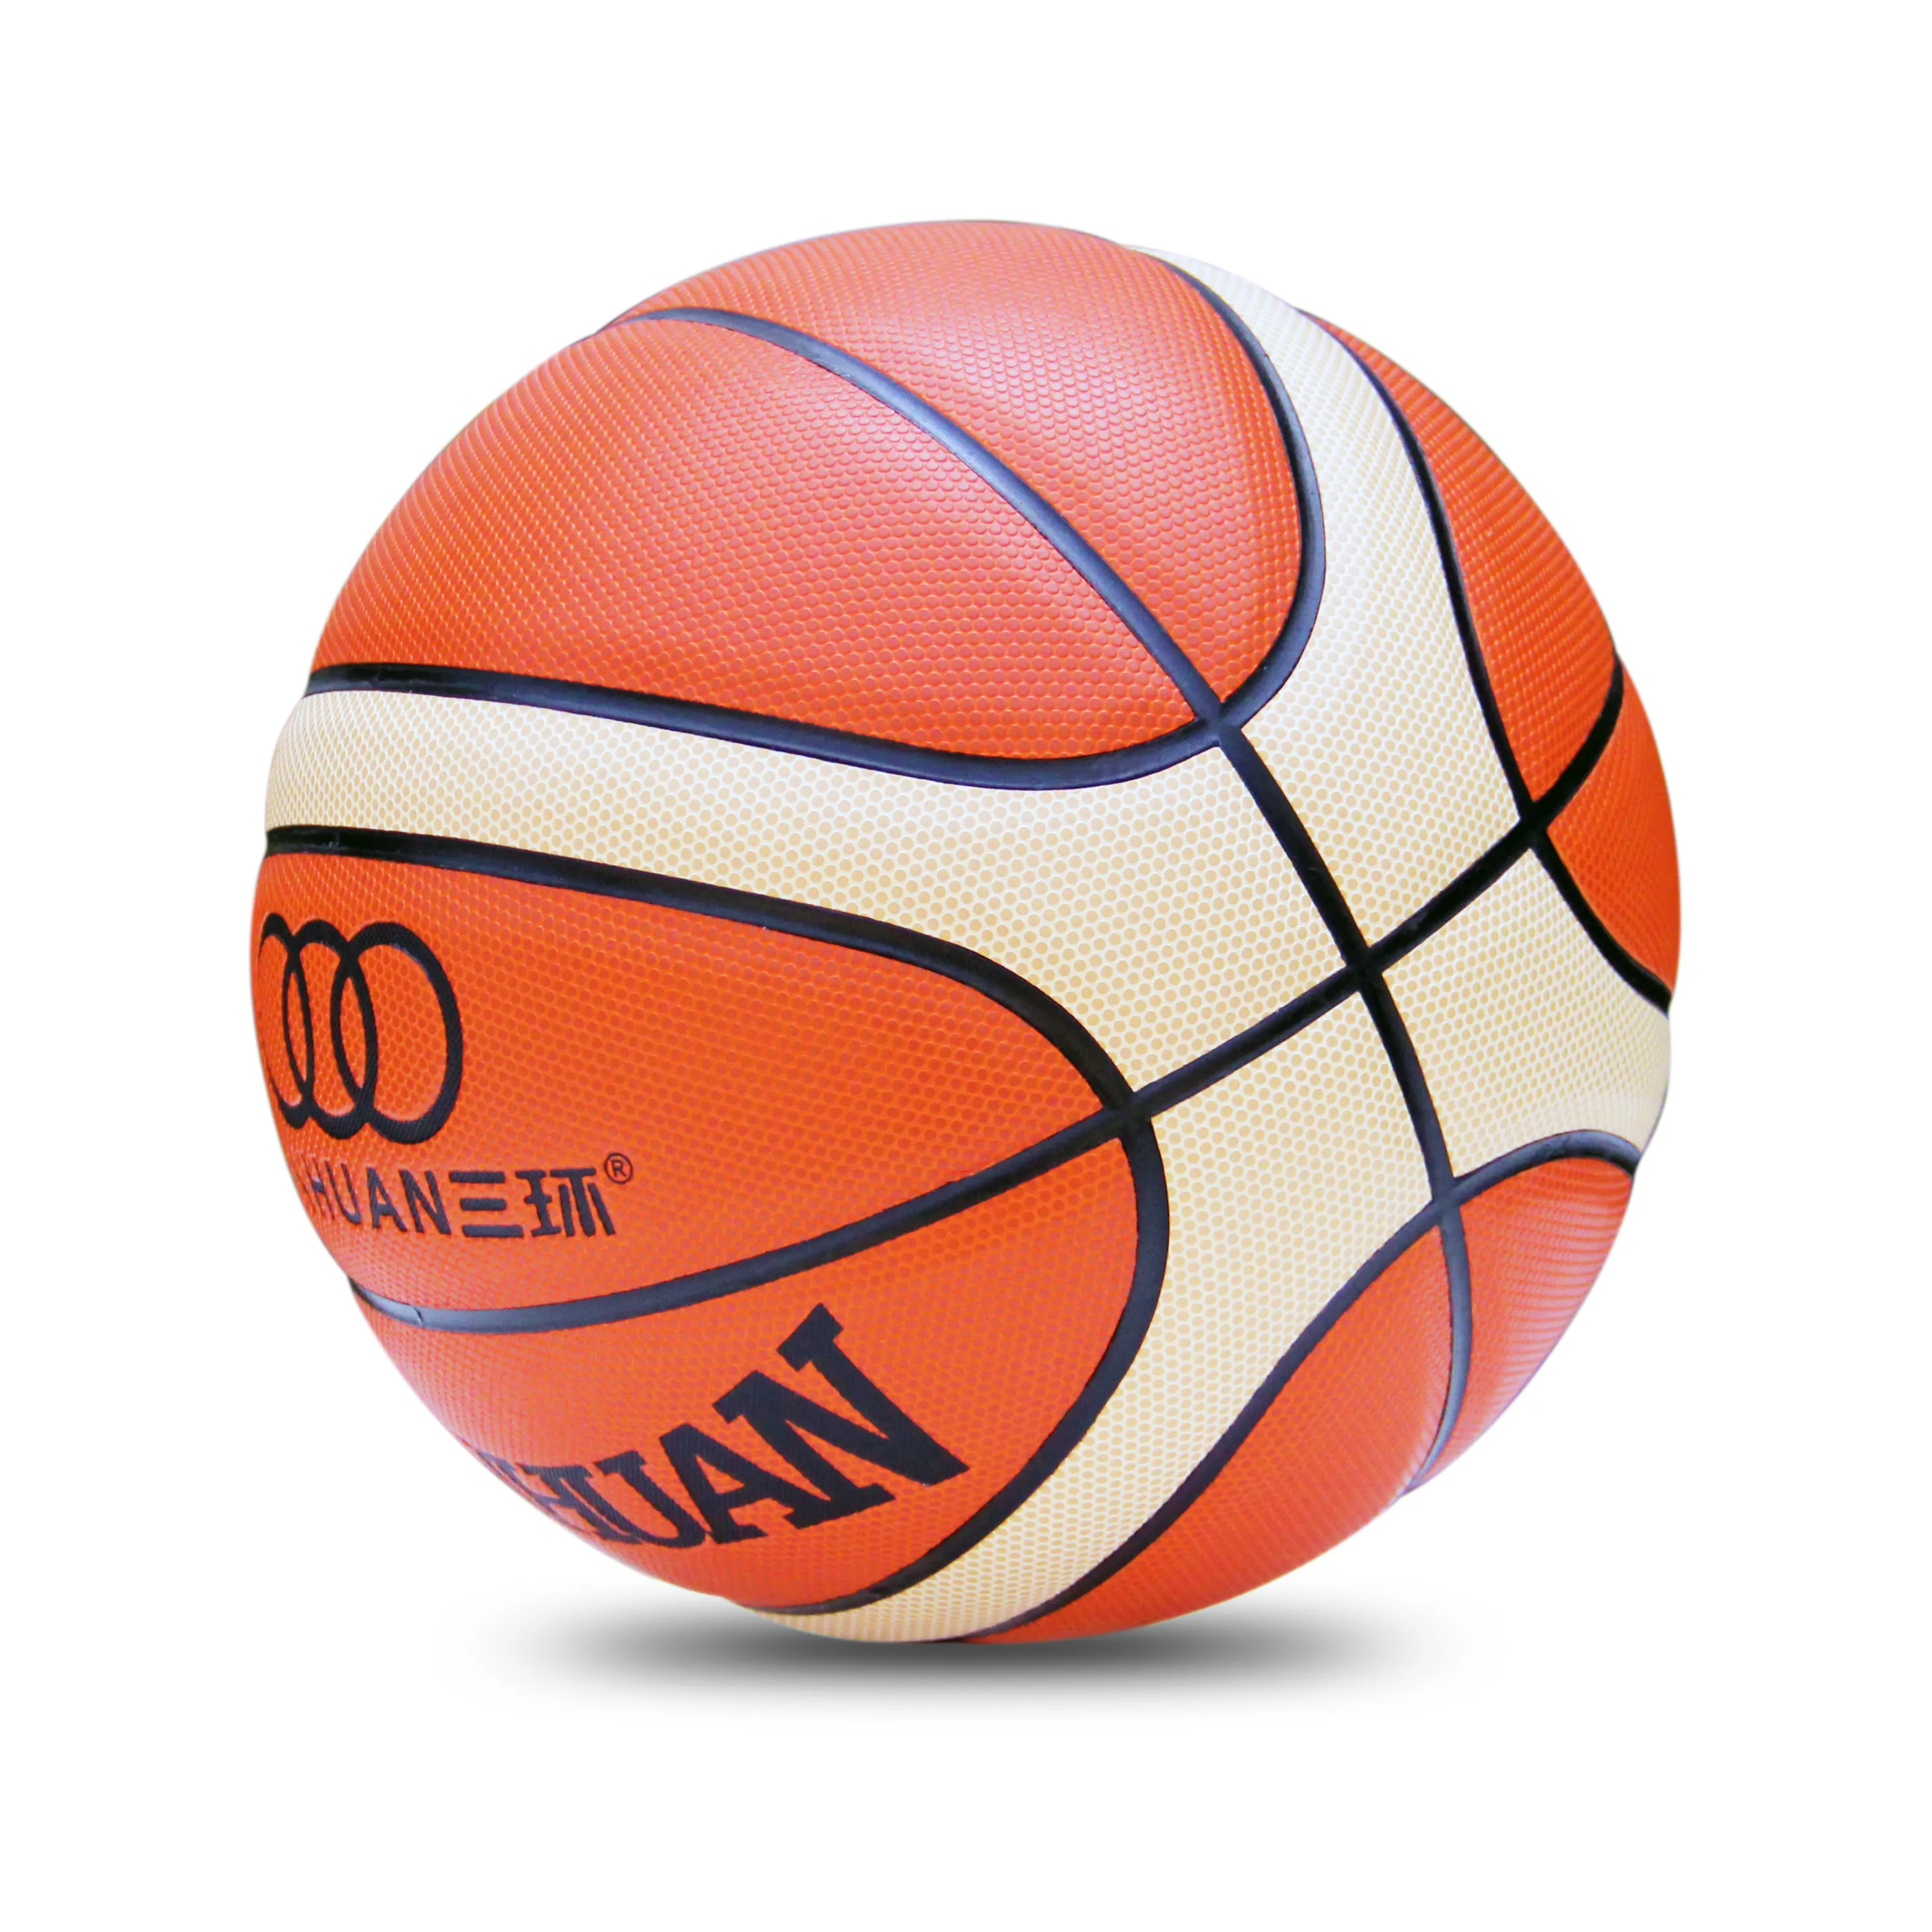 FIBA Official Size Match wholesale Molten basketball soft touch HIGH quality Hygroscopic Leather custom Molten basketball ball G